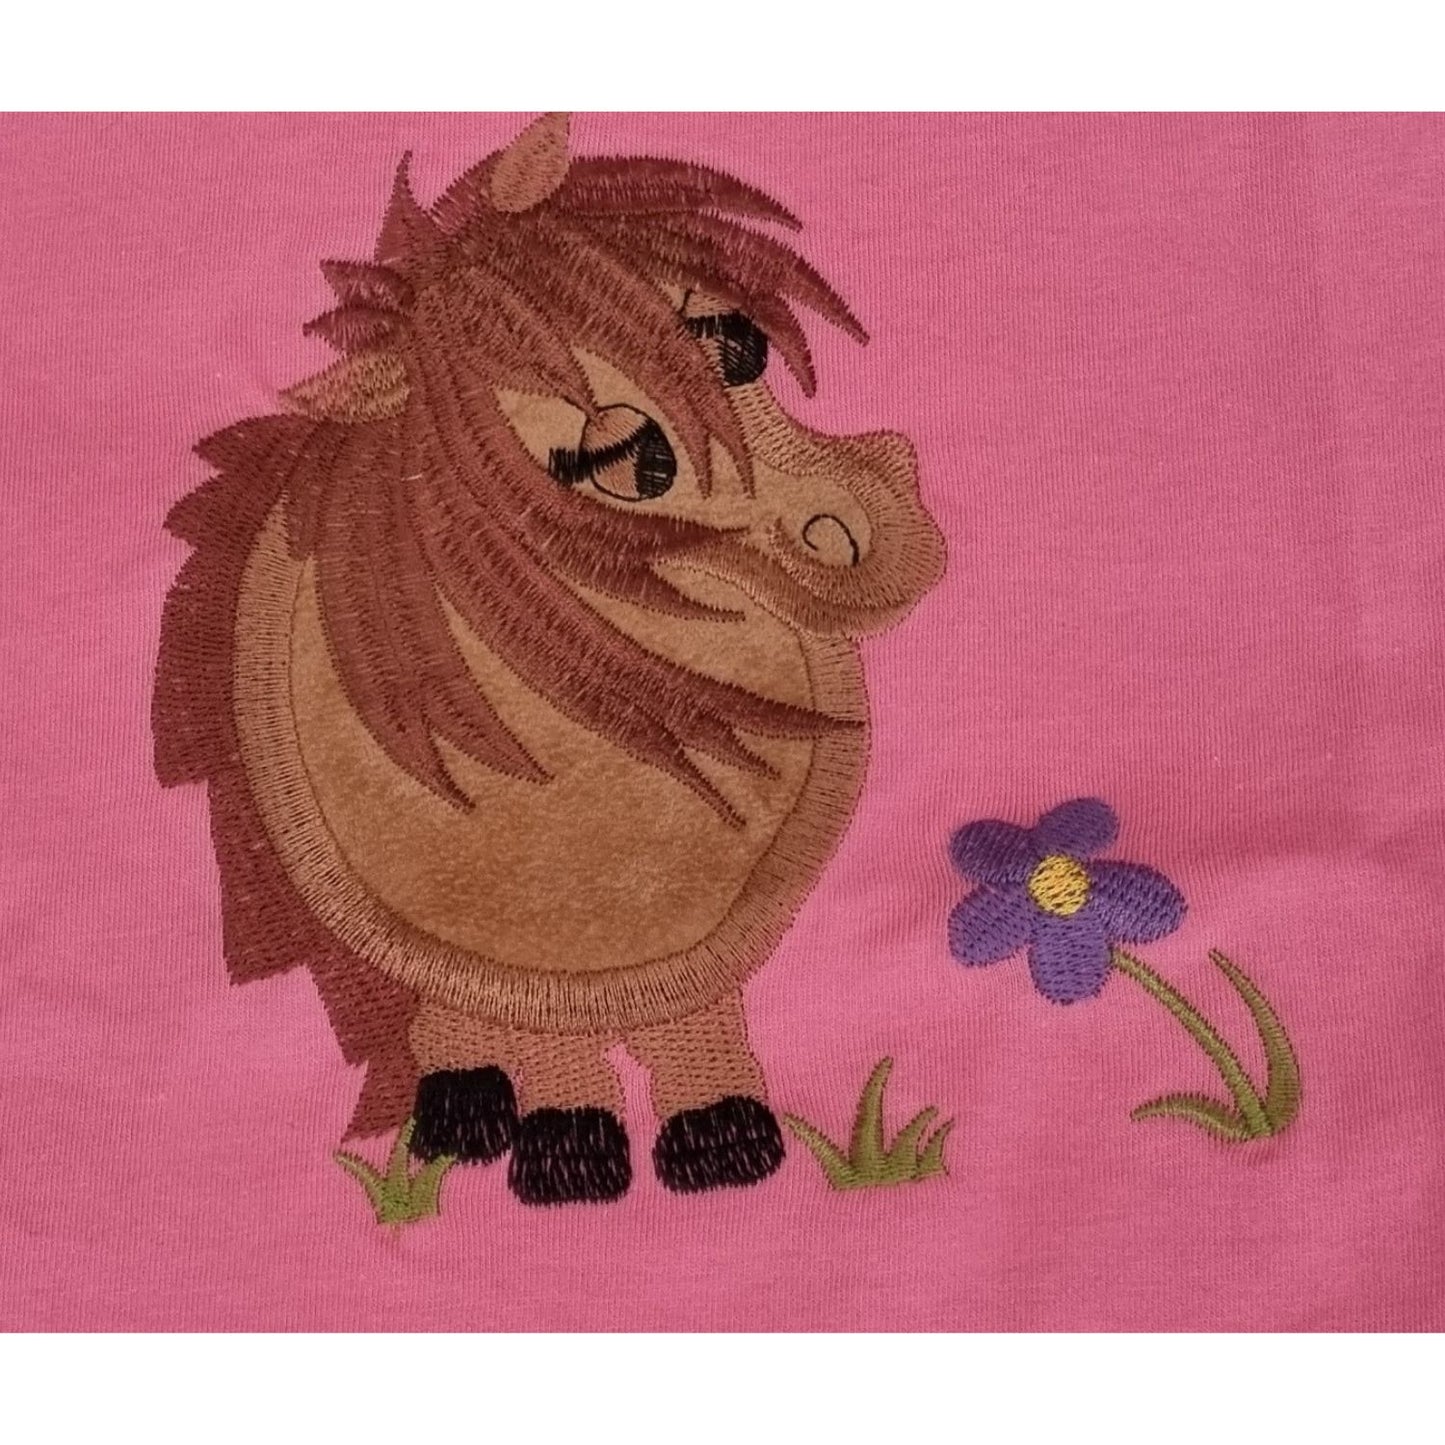 Children's Pink T Shirt Embroidered Applique Cuddly Pony